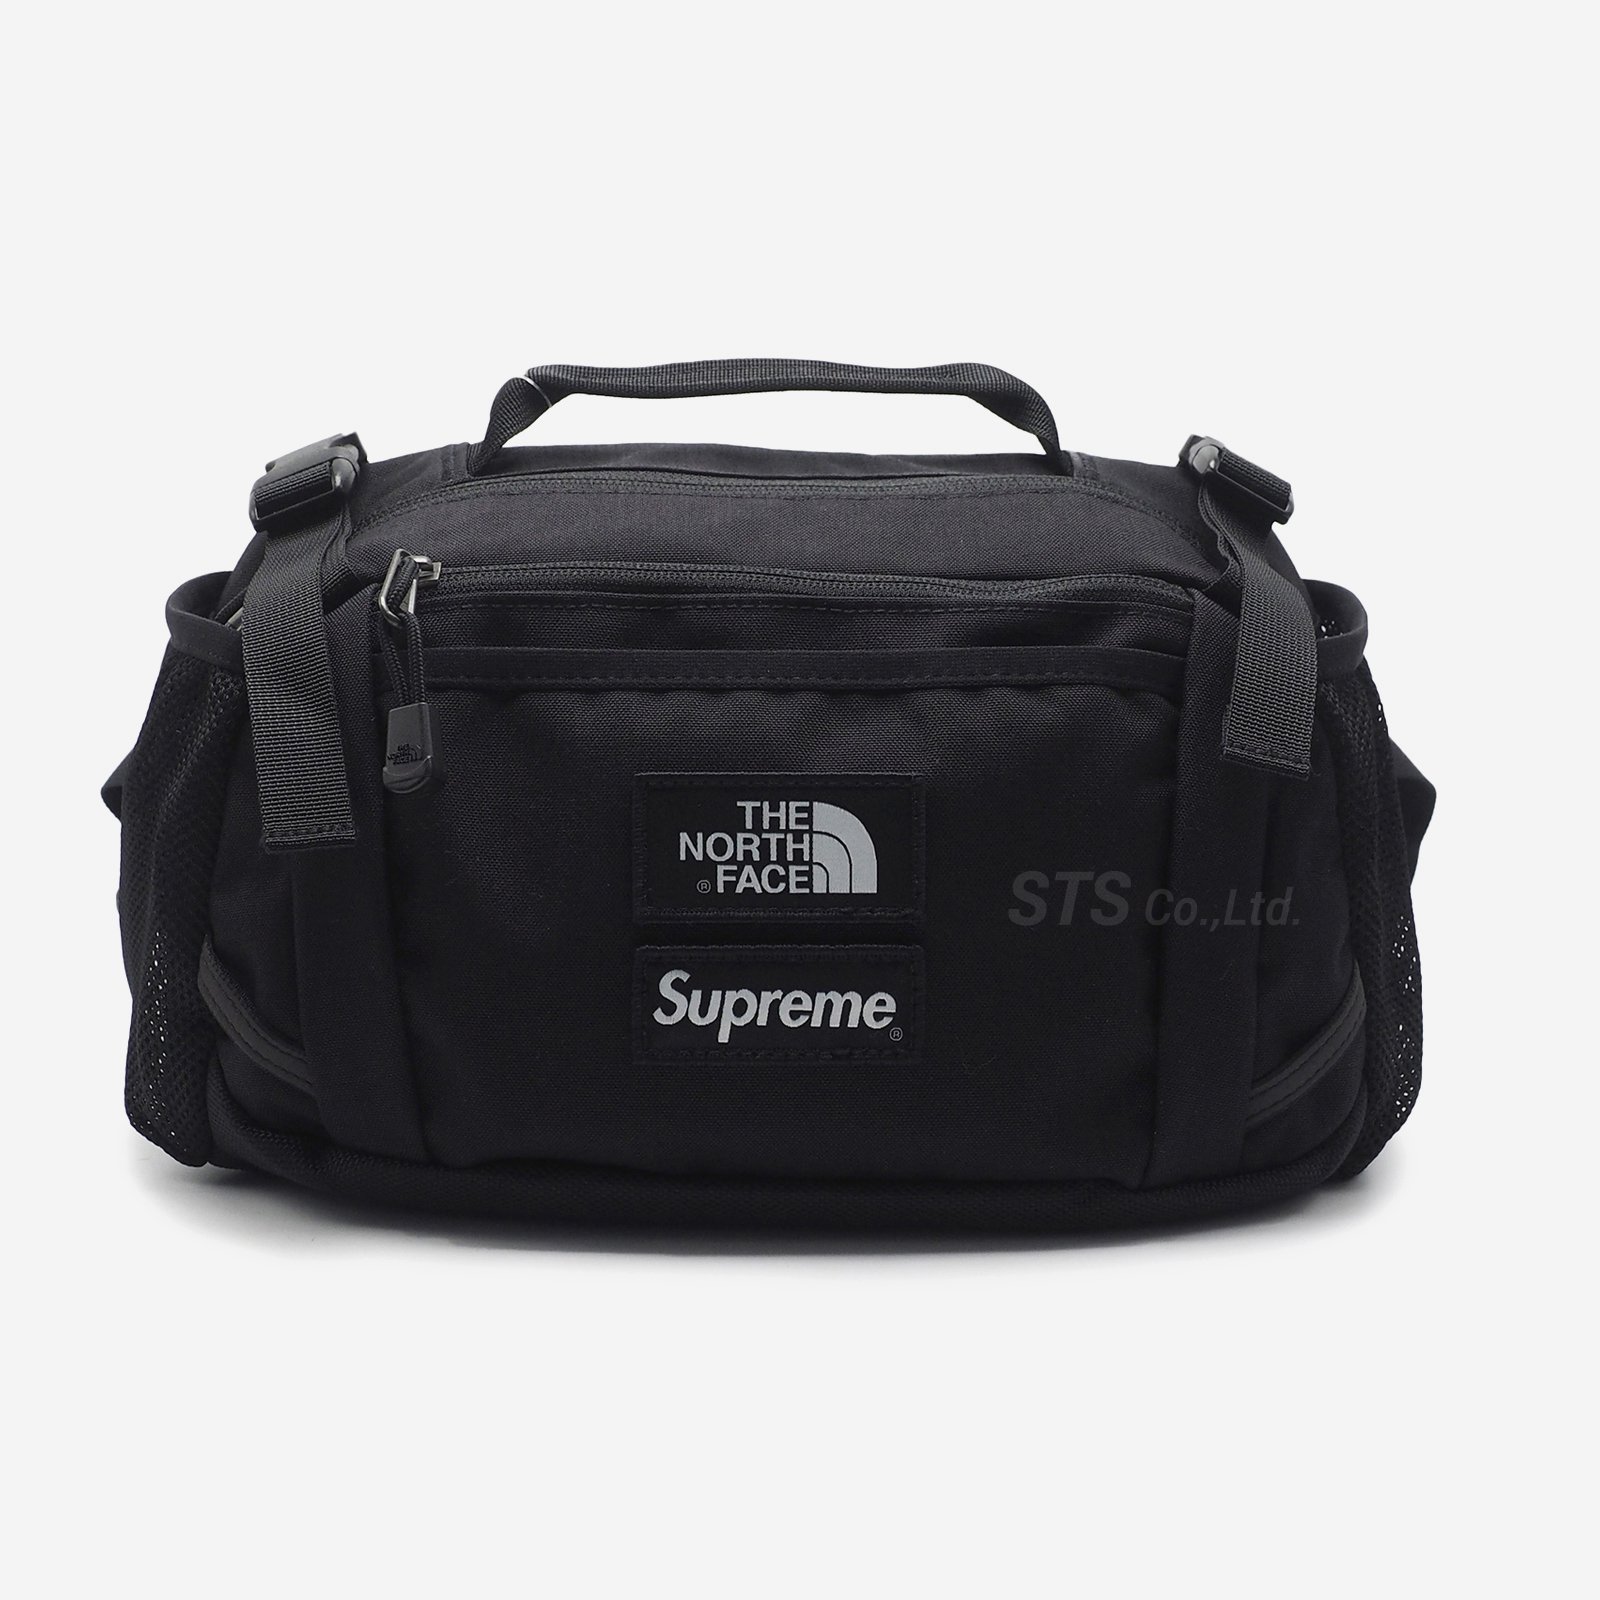 Supreme The North Face Waist Bag 黒